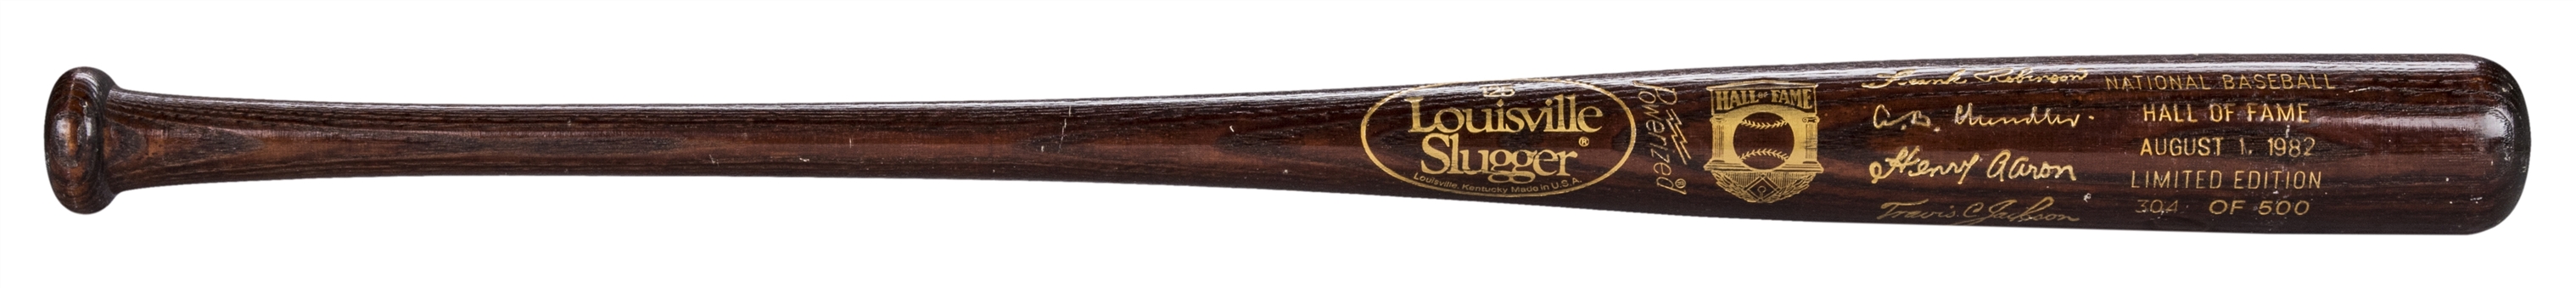 National Baseball Hall of Fame Commemorative Bat for 1982 Induction (LE 304/500)